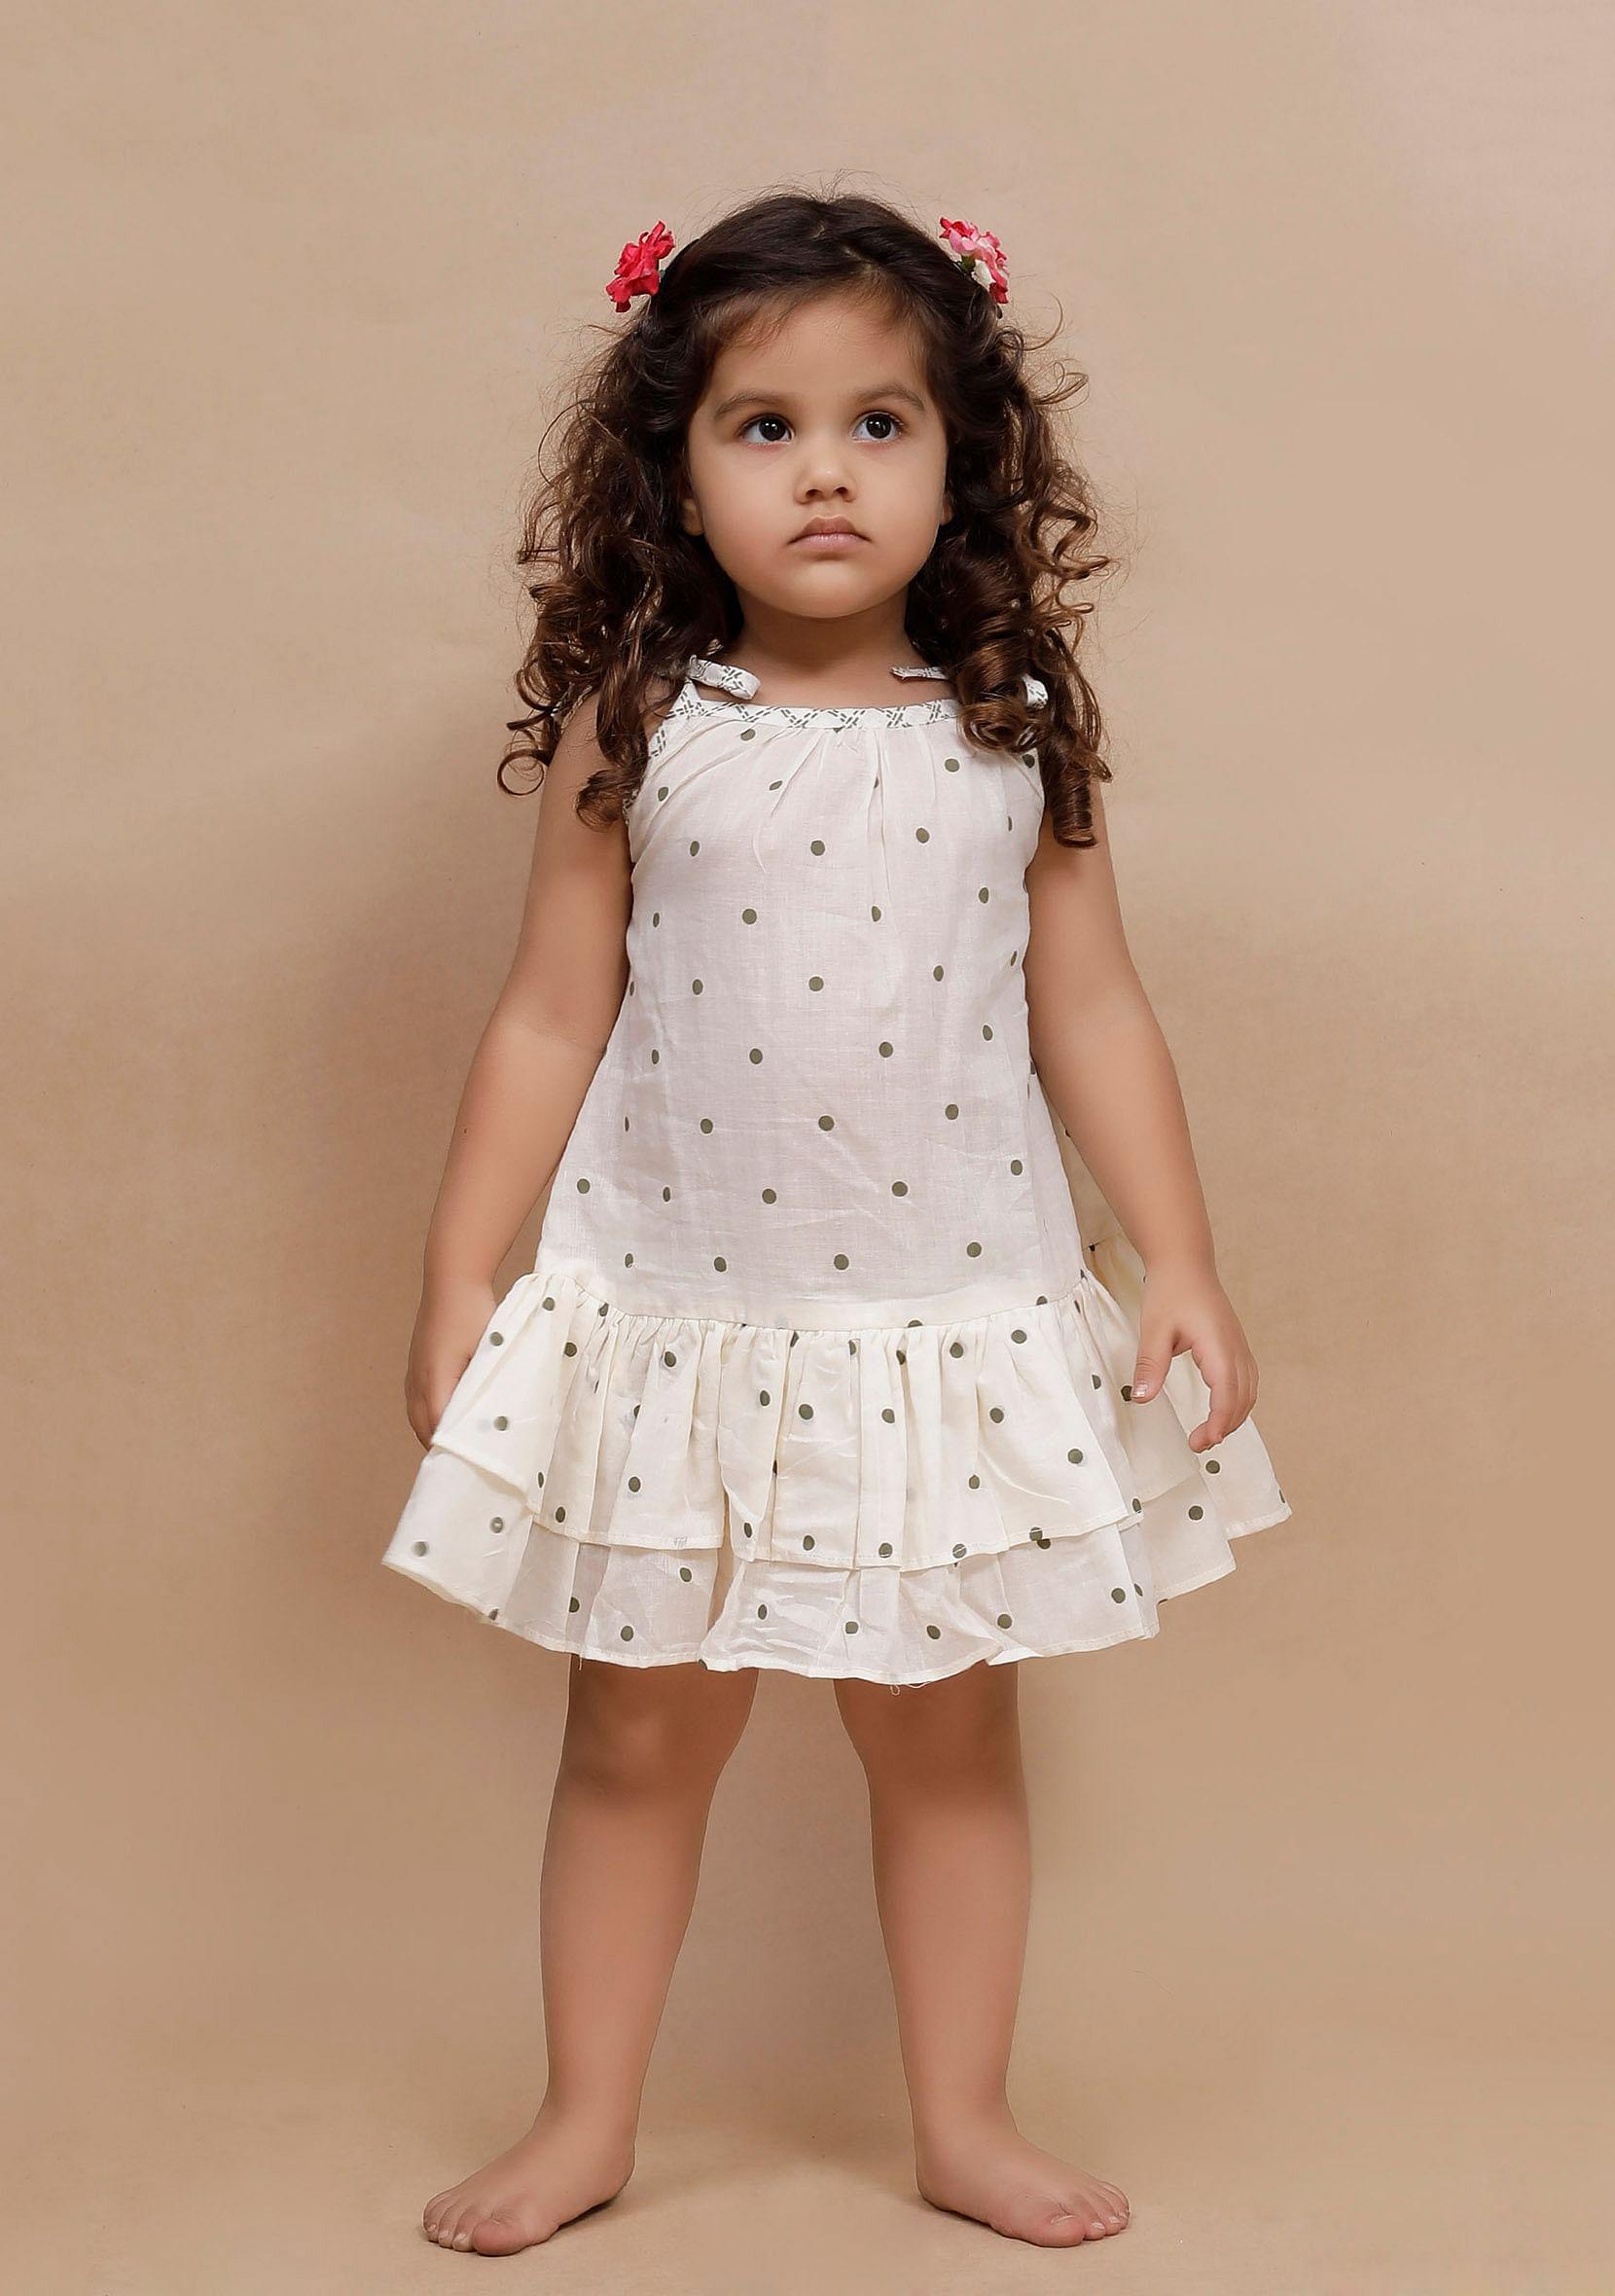 off-white polka dot printed dress